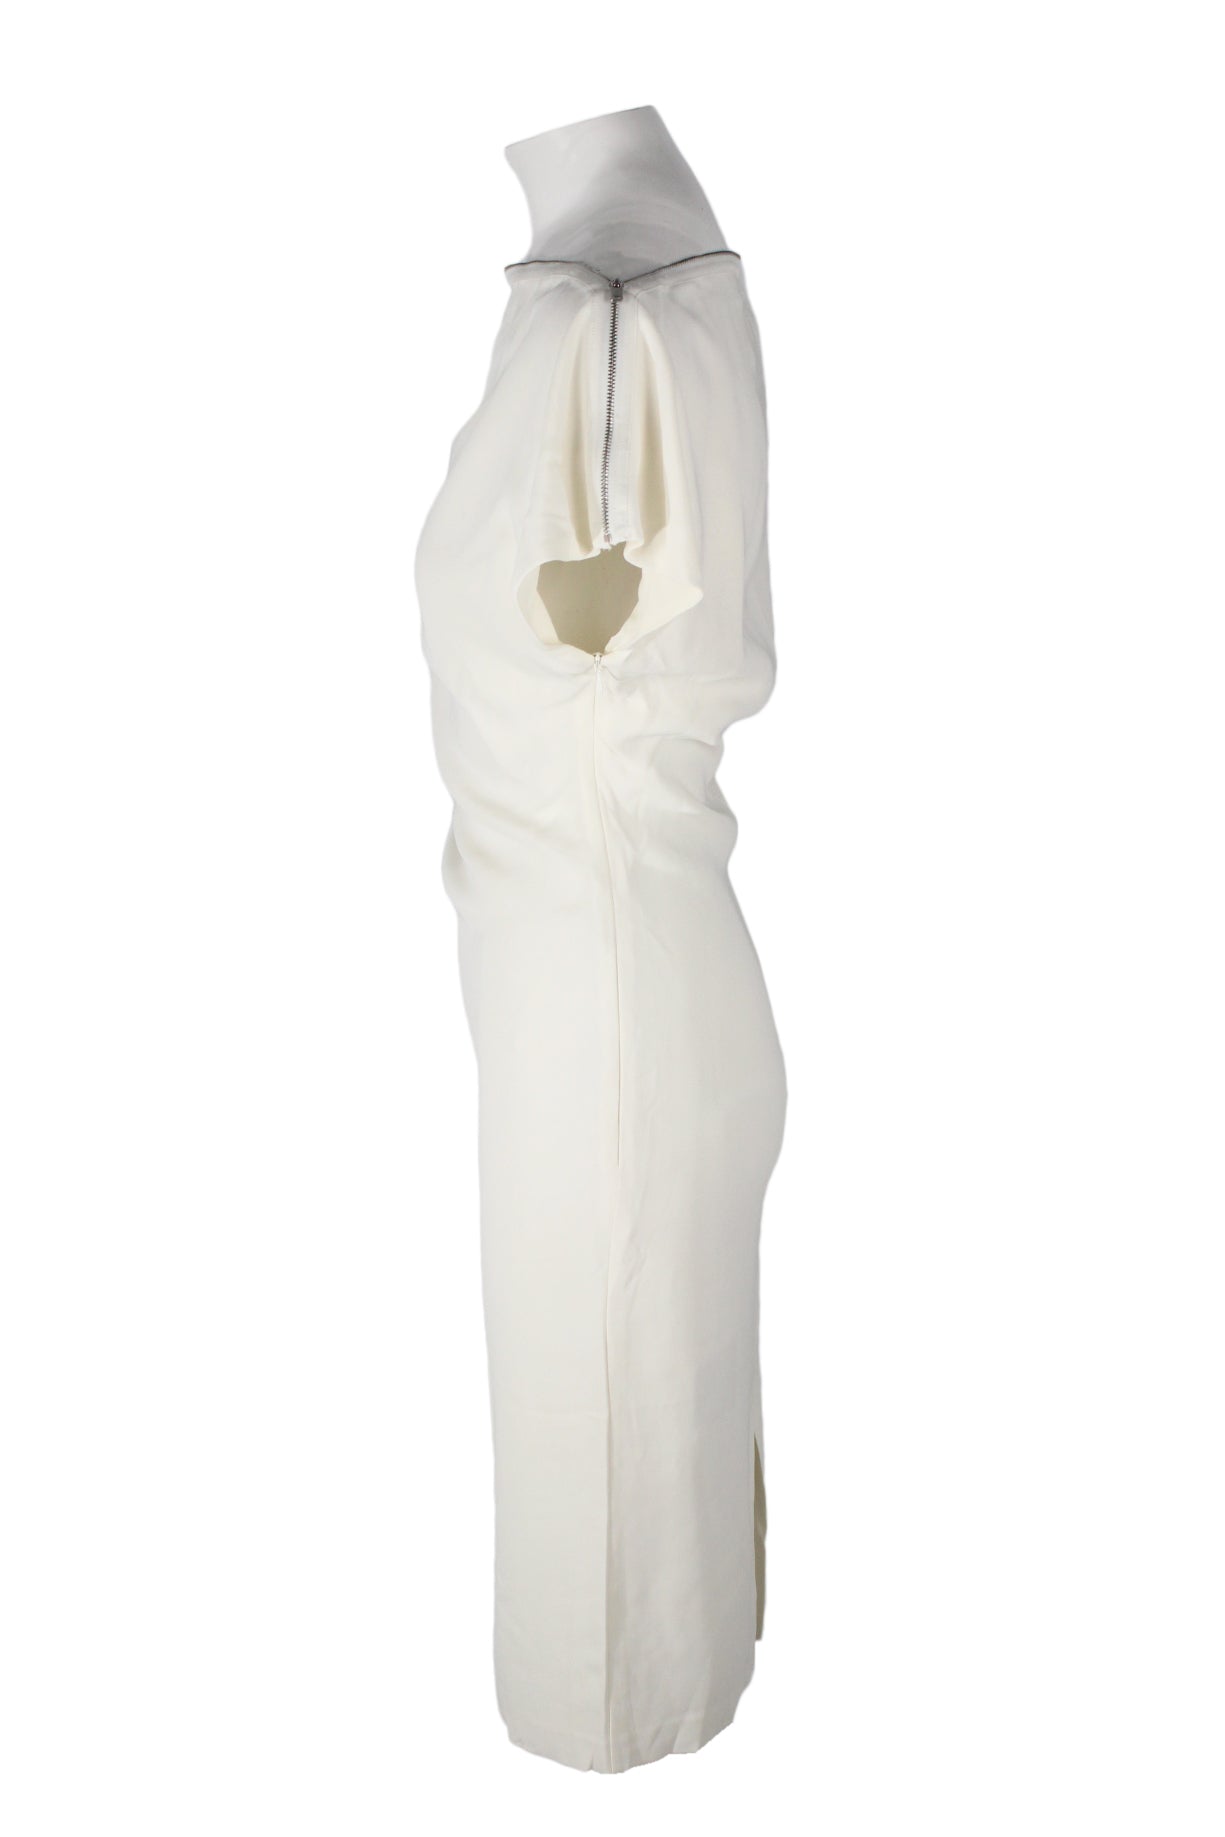 profile of dress displayed on full mannequin, showing neckline zipper. 